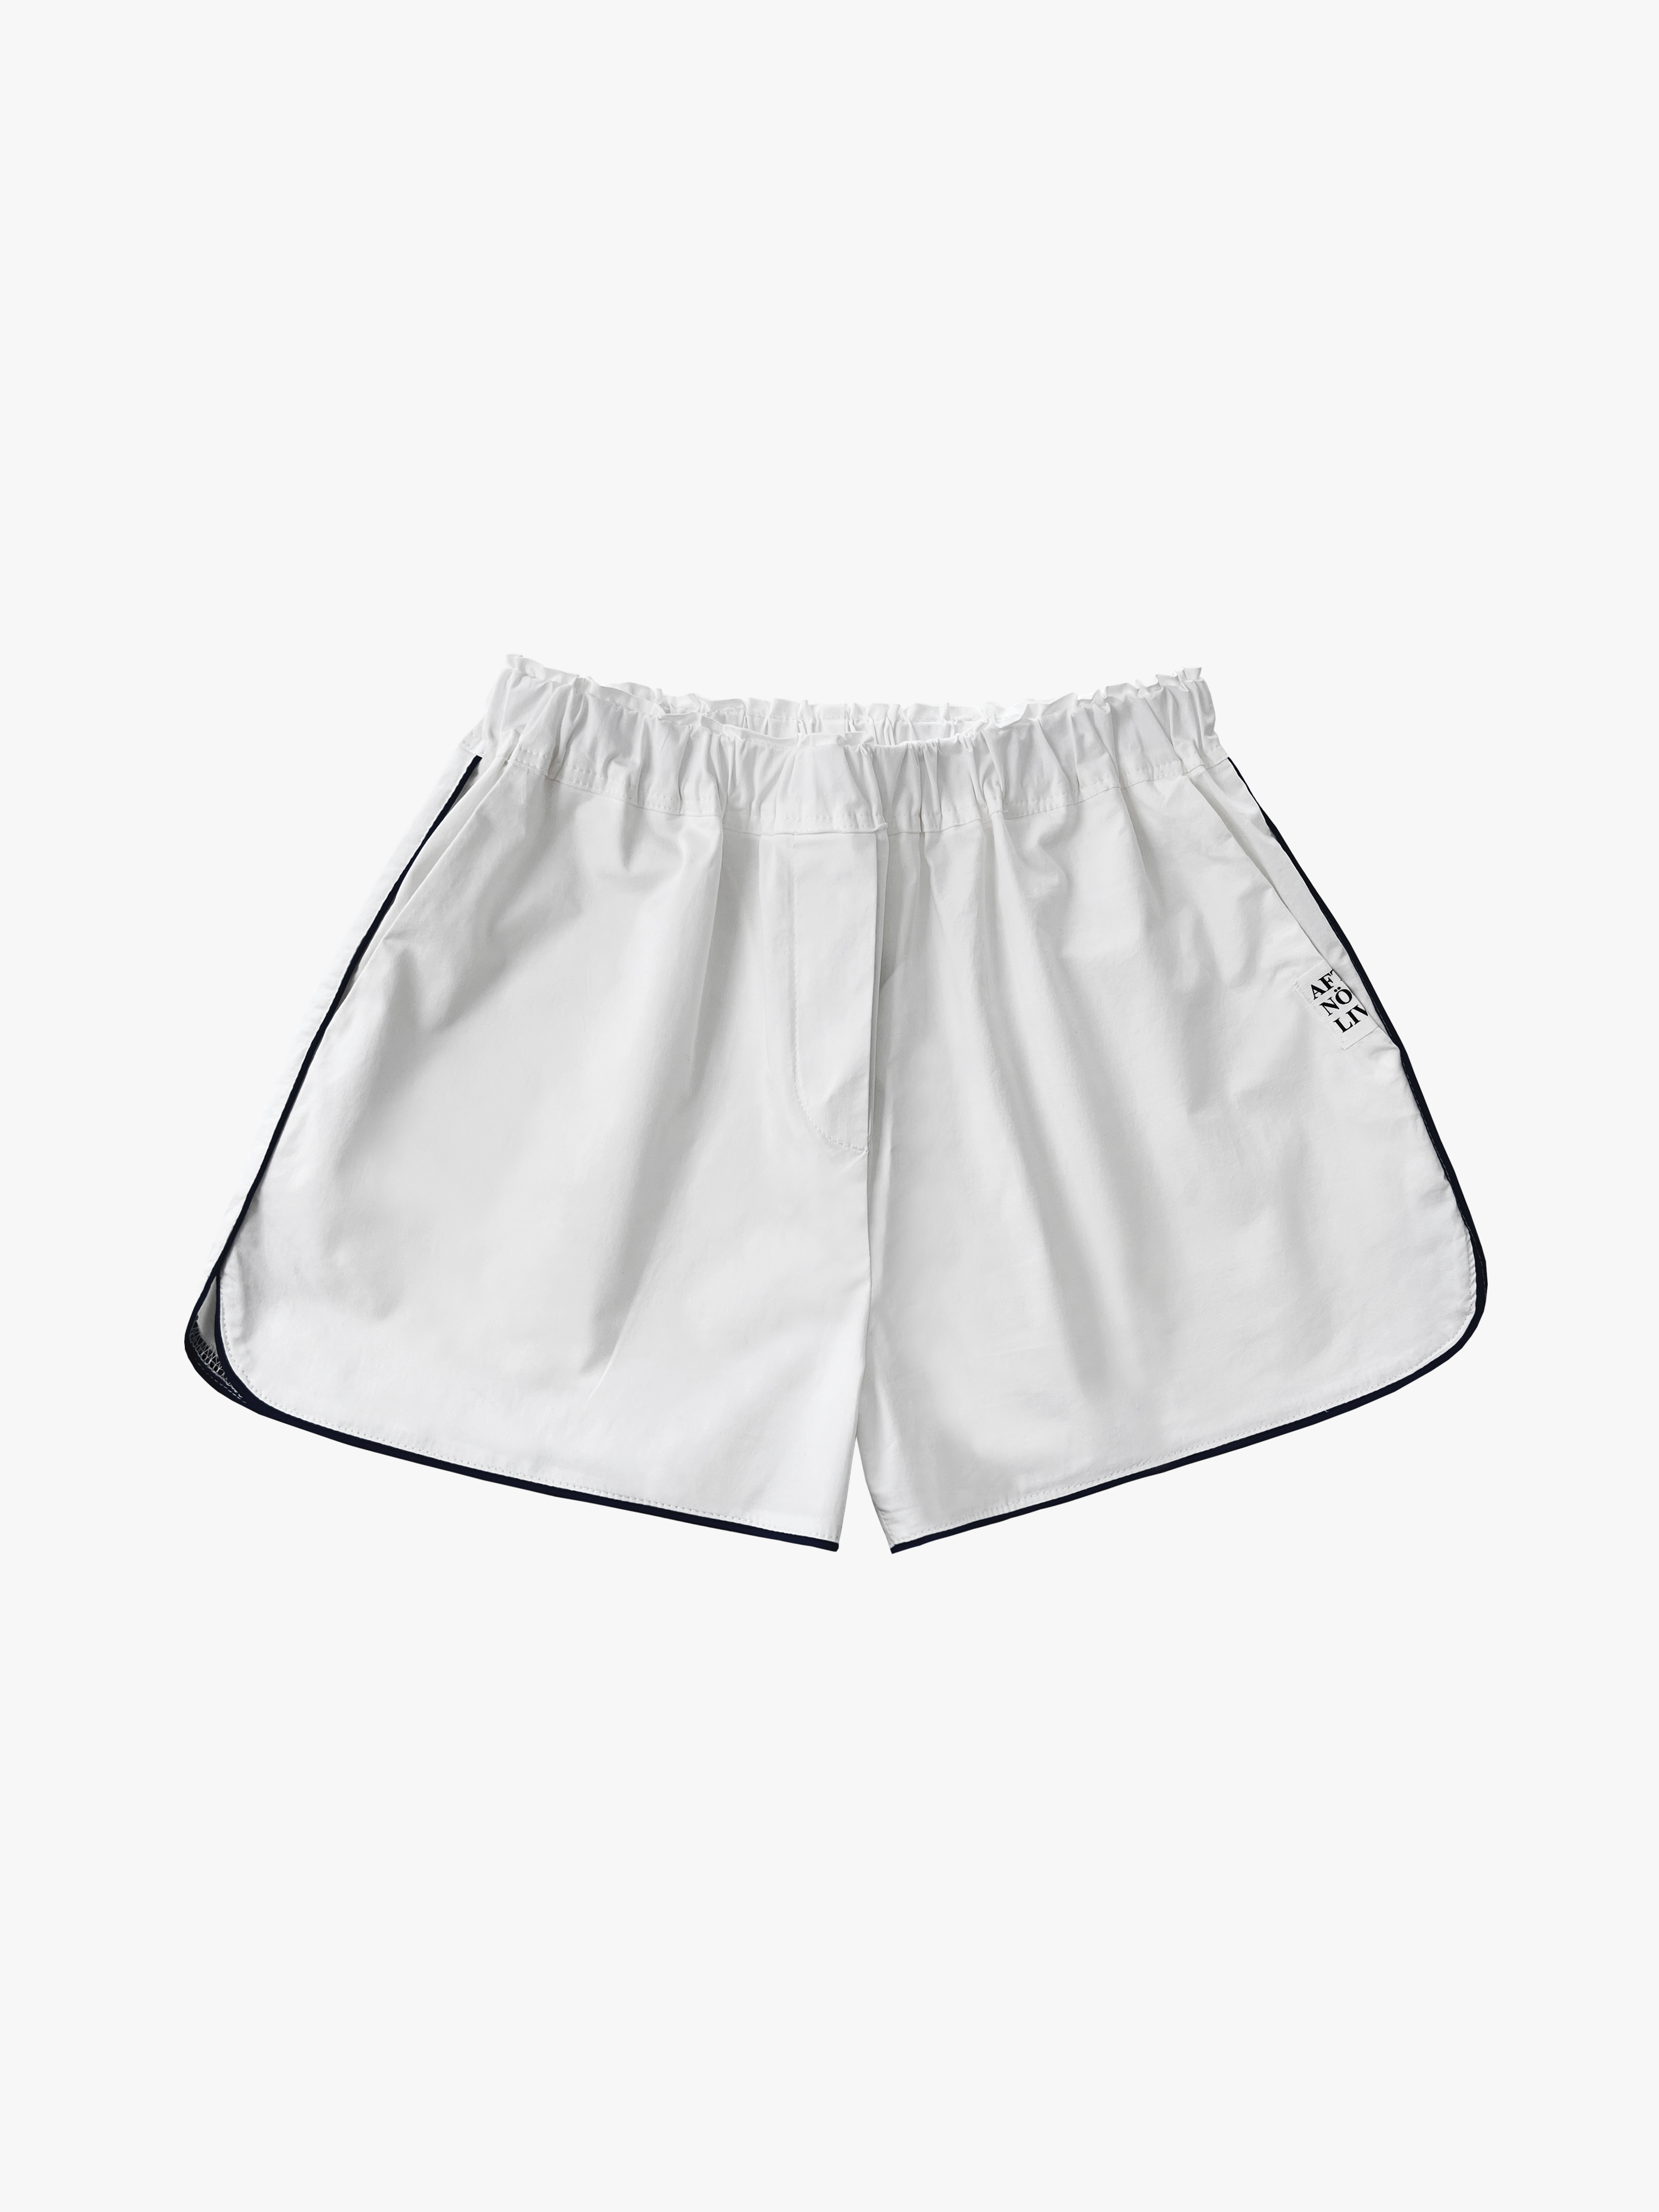 Summer Dolphin Shorts (White)